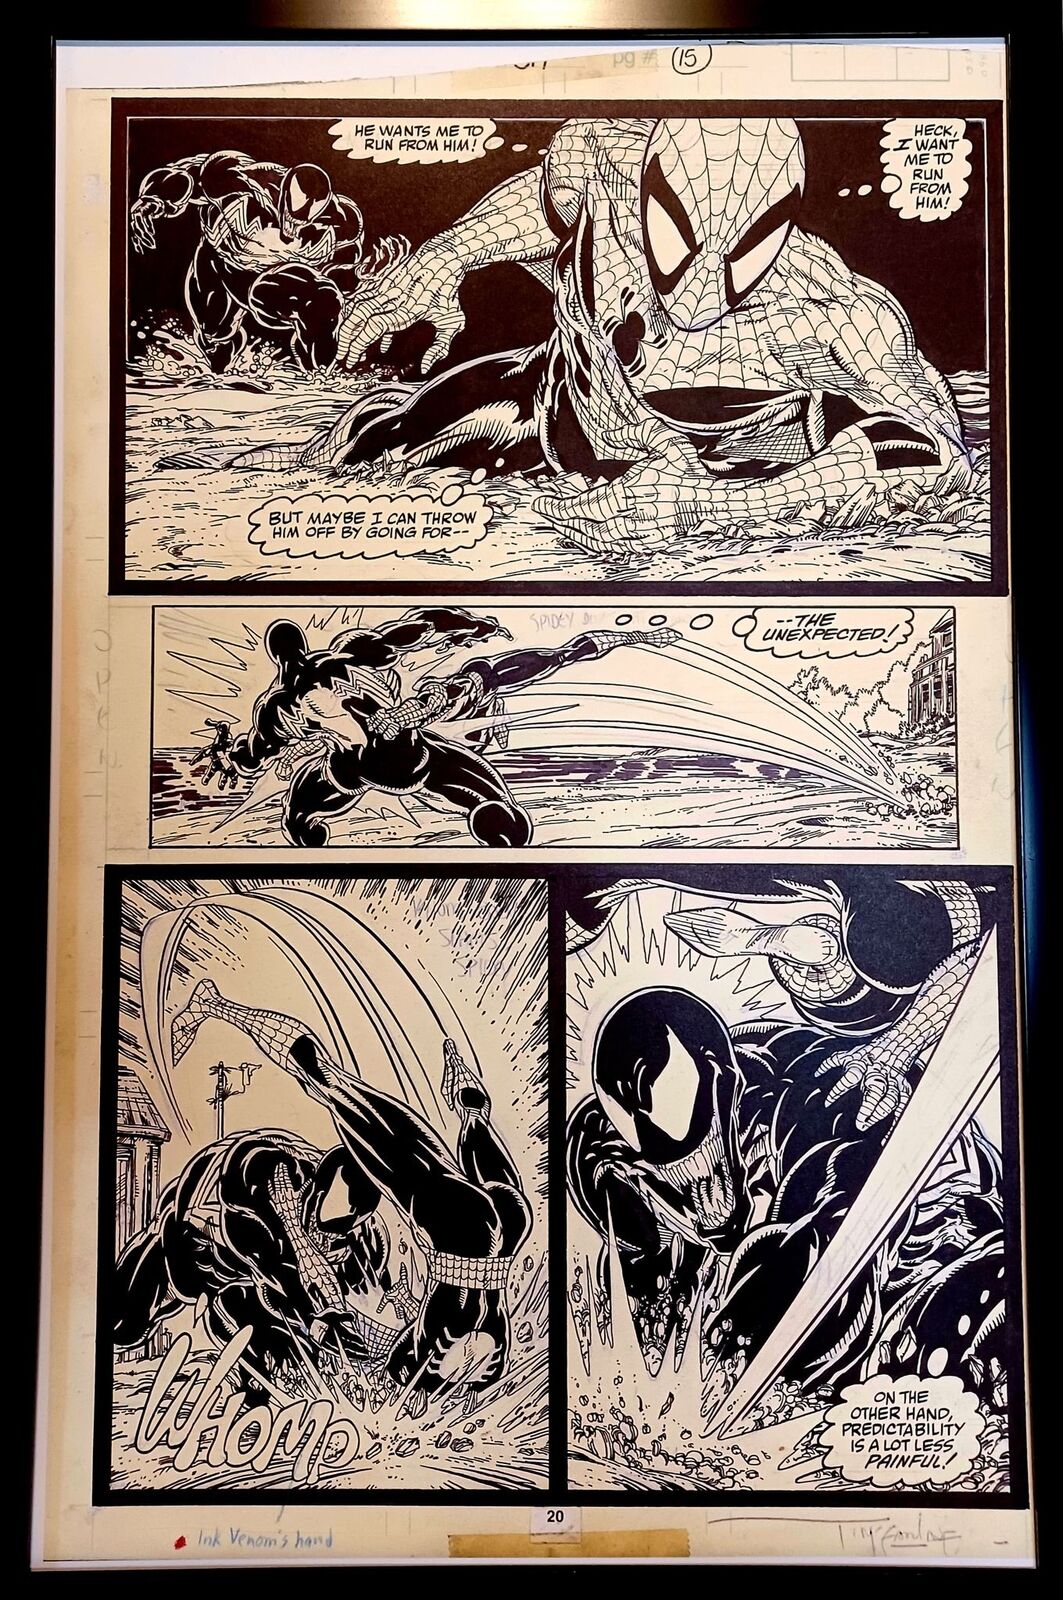 Amazing Spider-Man #317 pg. 15 by Todd McFarlane 11x17 FRAMED Original Art Print